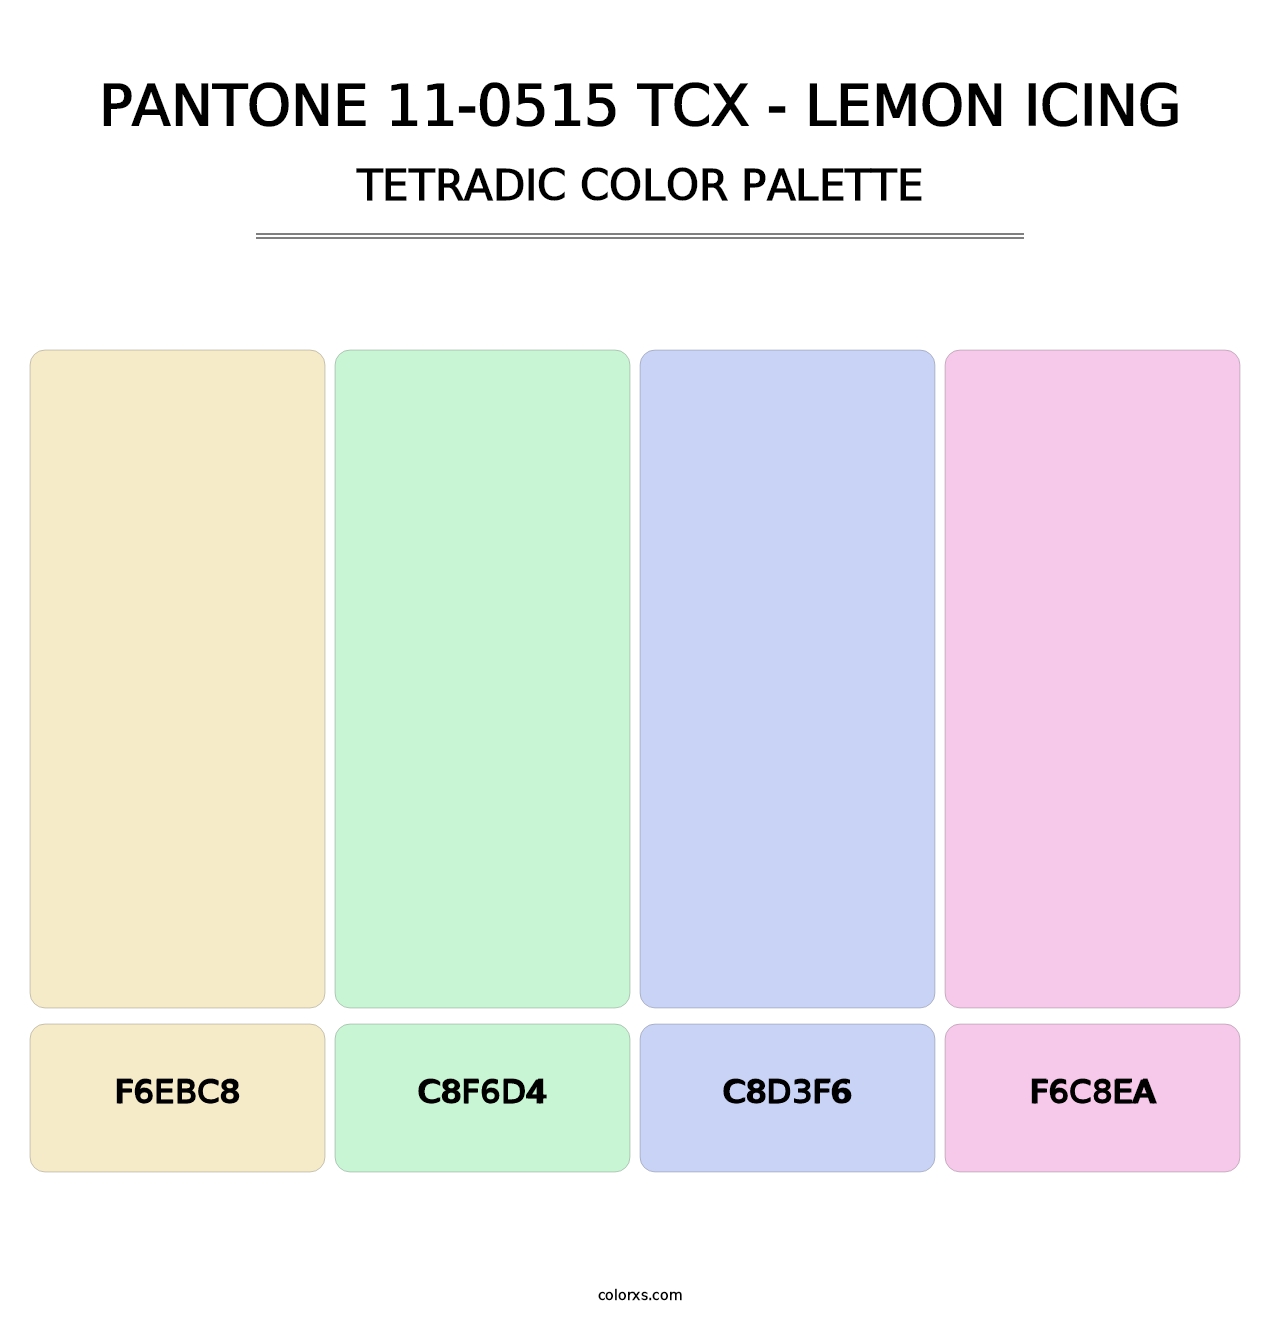 PANTONE 11-0515 TCX - Lemon Icing - Tetradic Color Palette